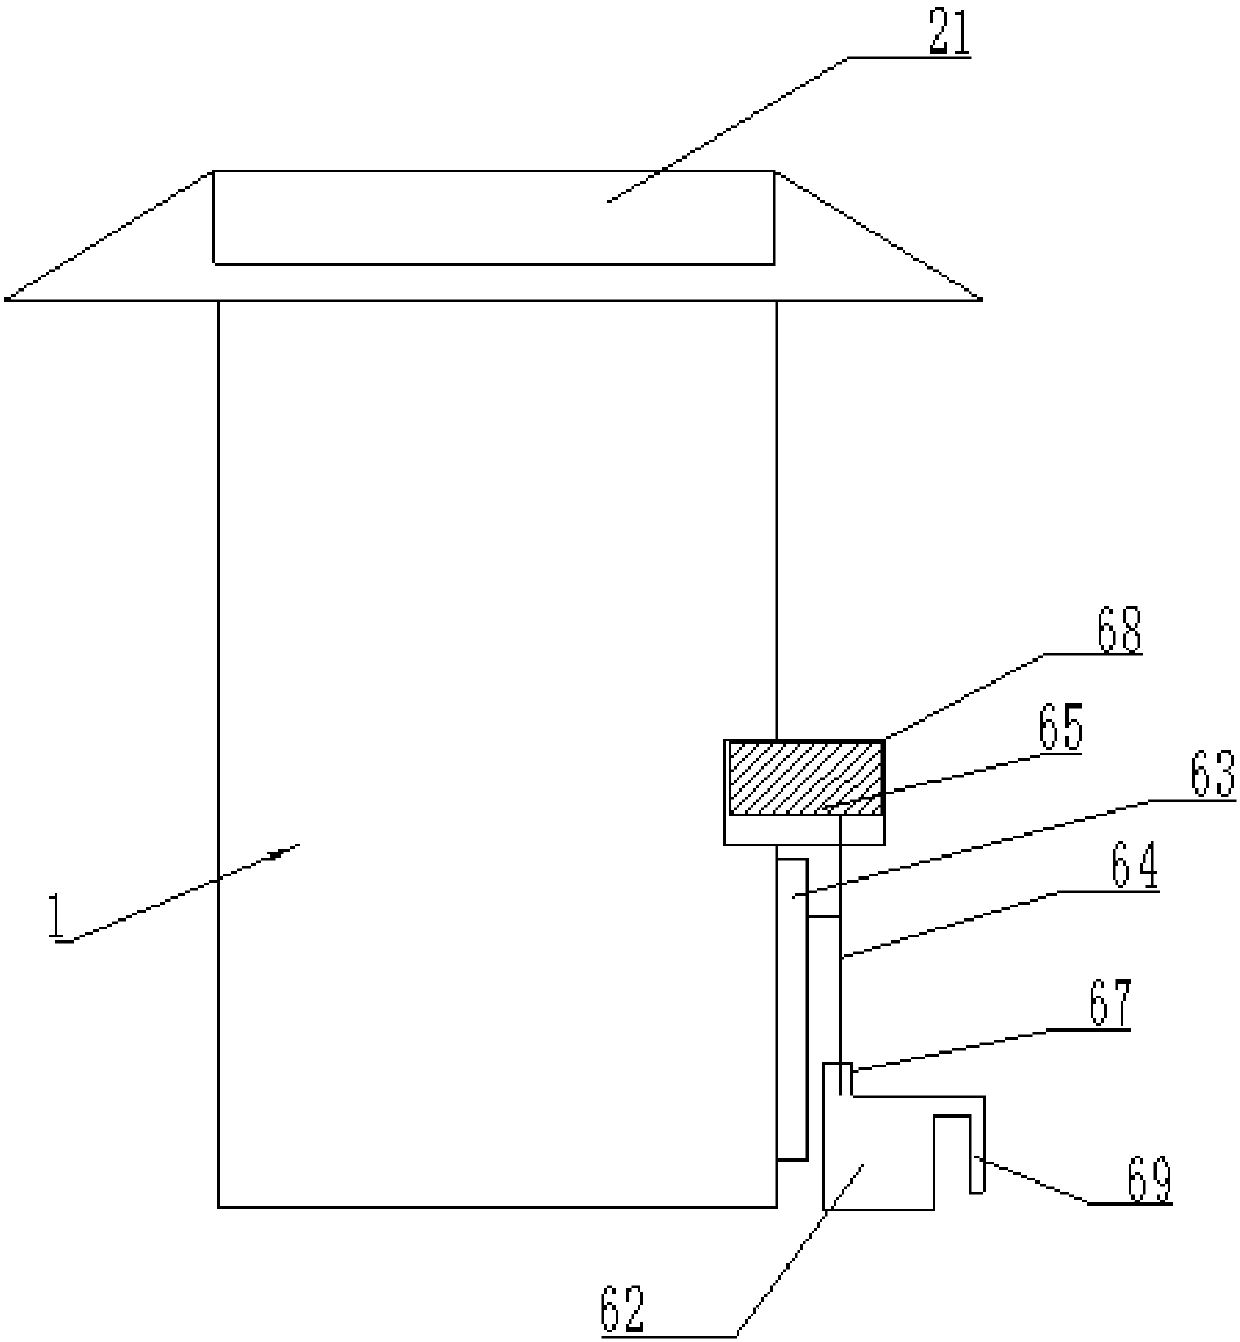 Power distribution cabinet cooling method